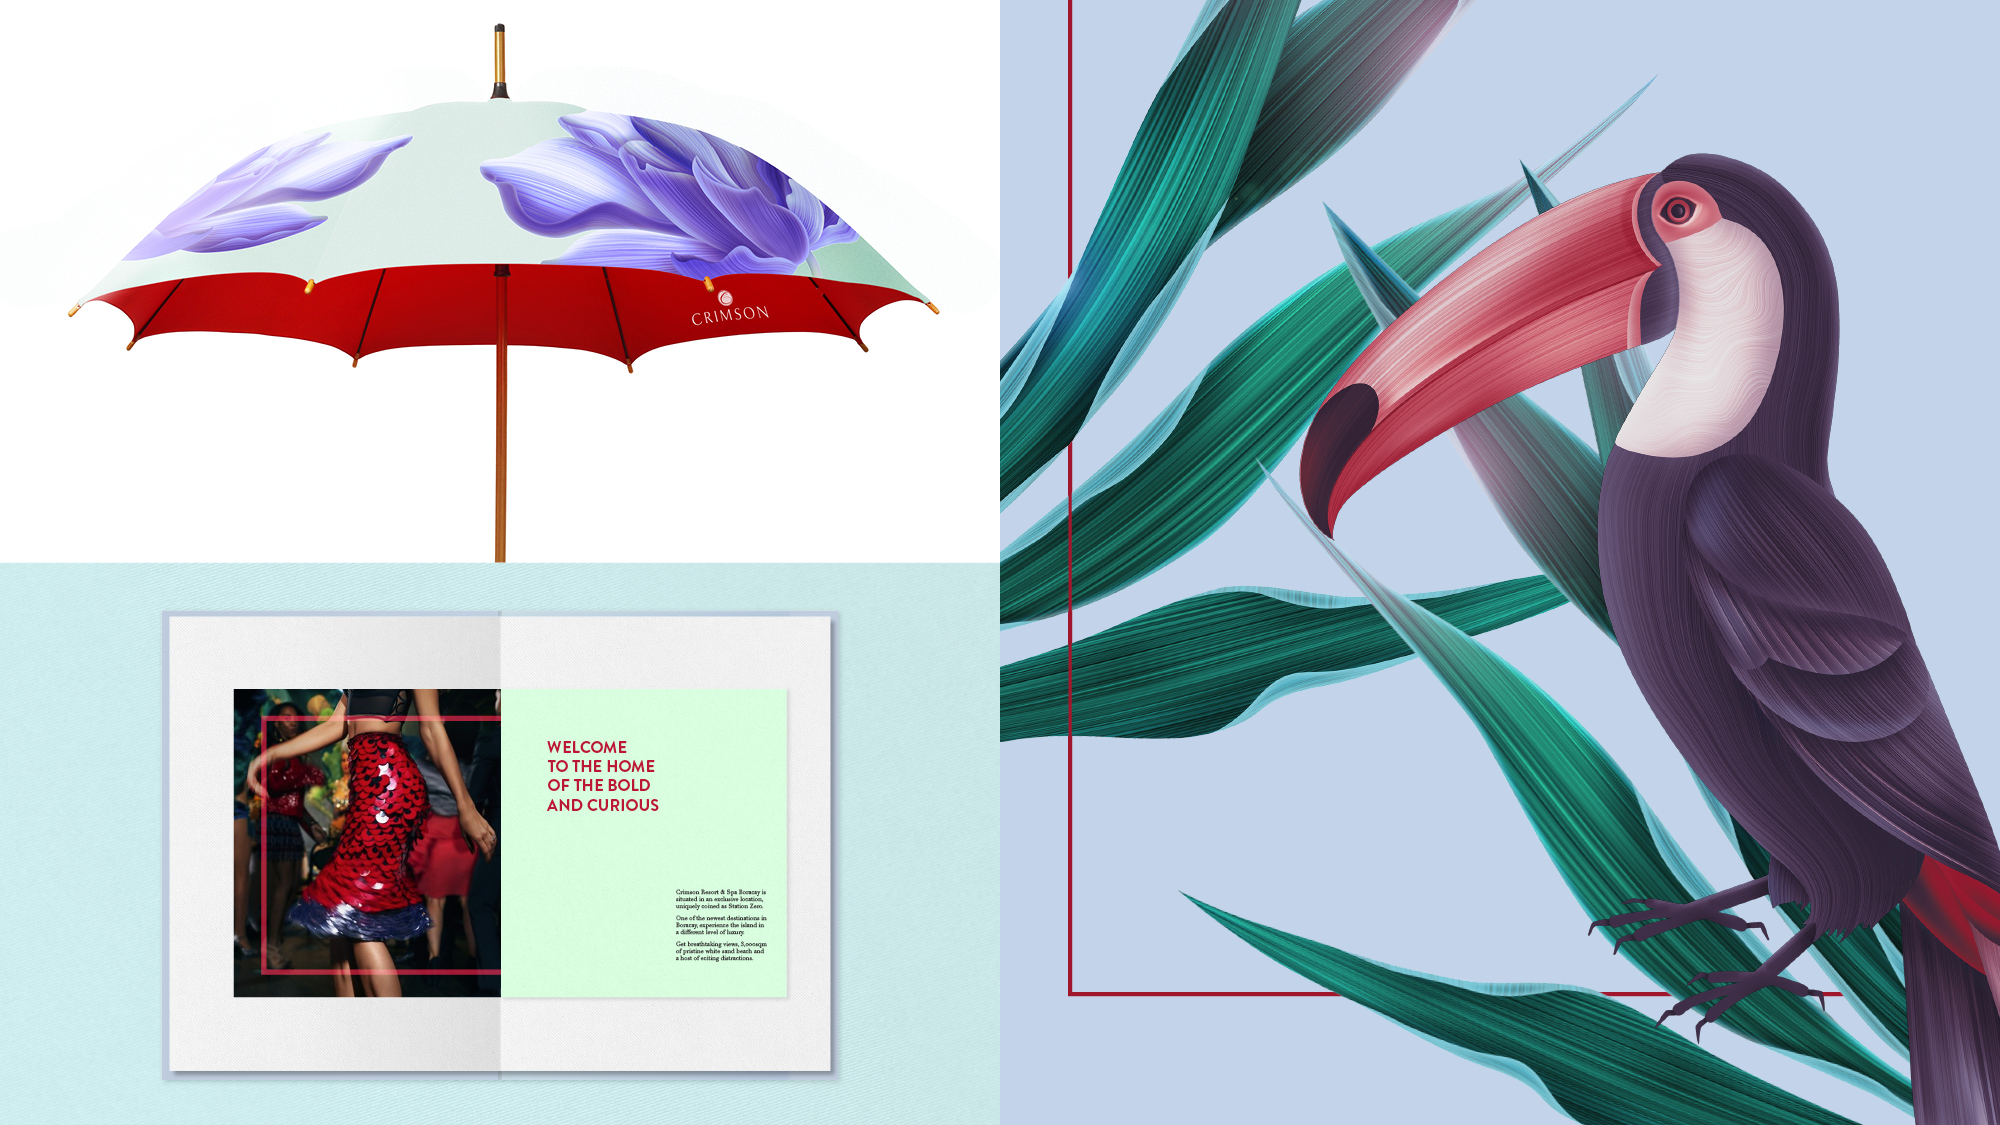 Entity-3-Three-Brand-Design-Agency-Sydney-Hotels-and-Resorts-16-Crimson-experience-merchandise-umbrella-print-brochure-illustration